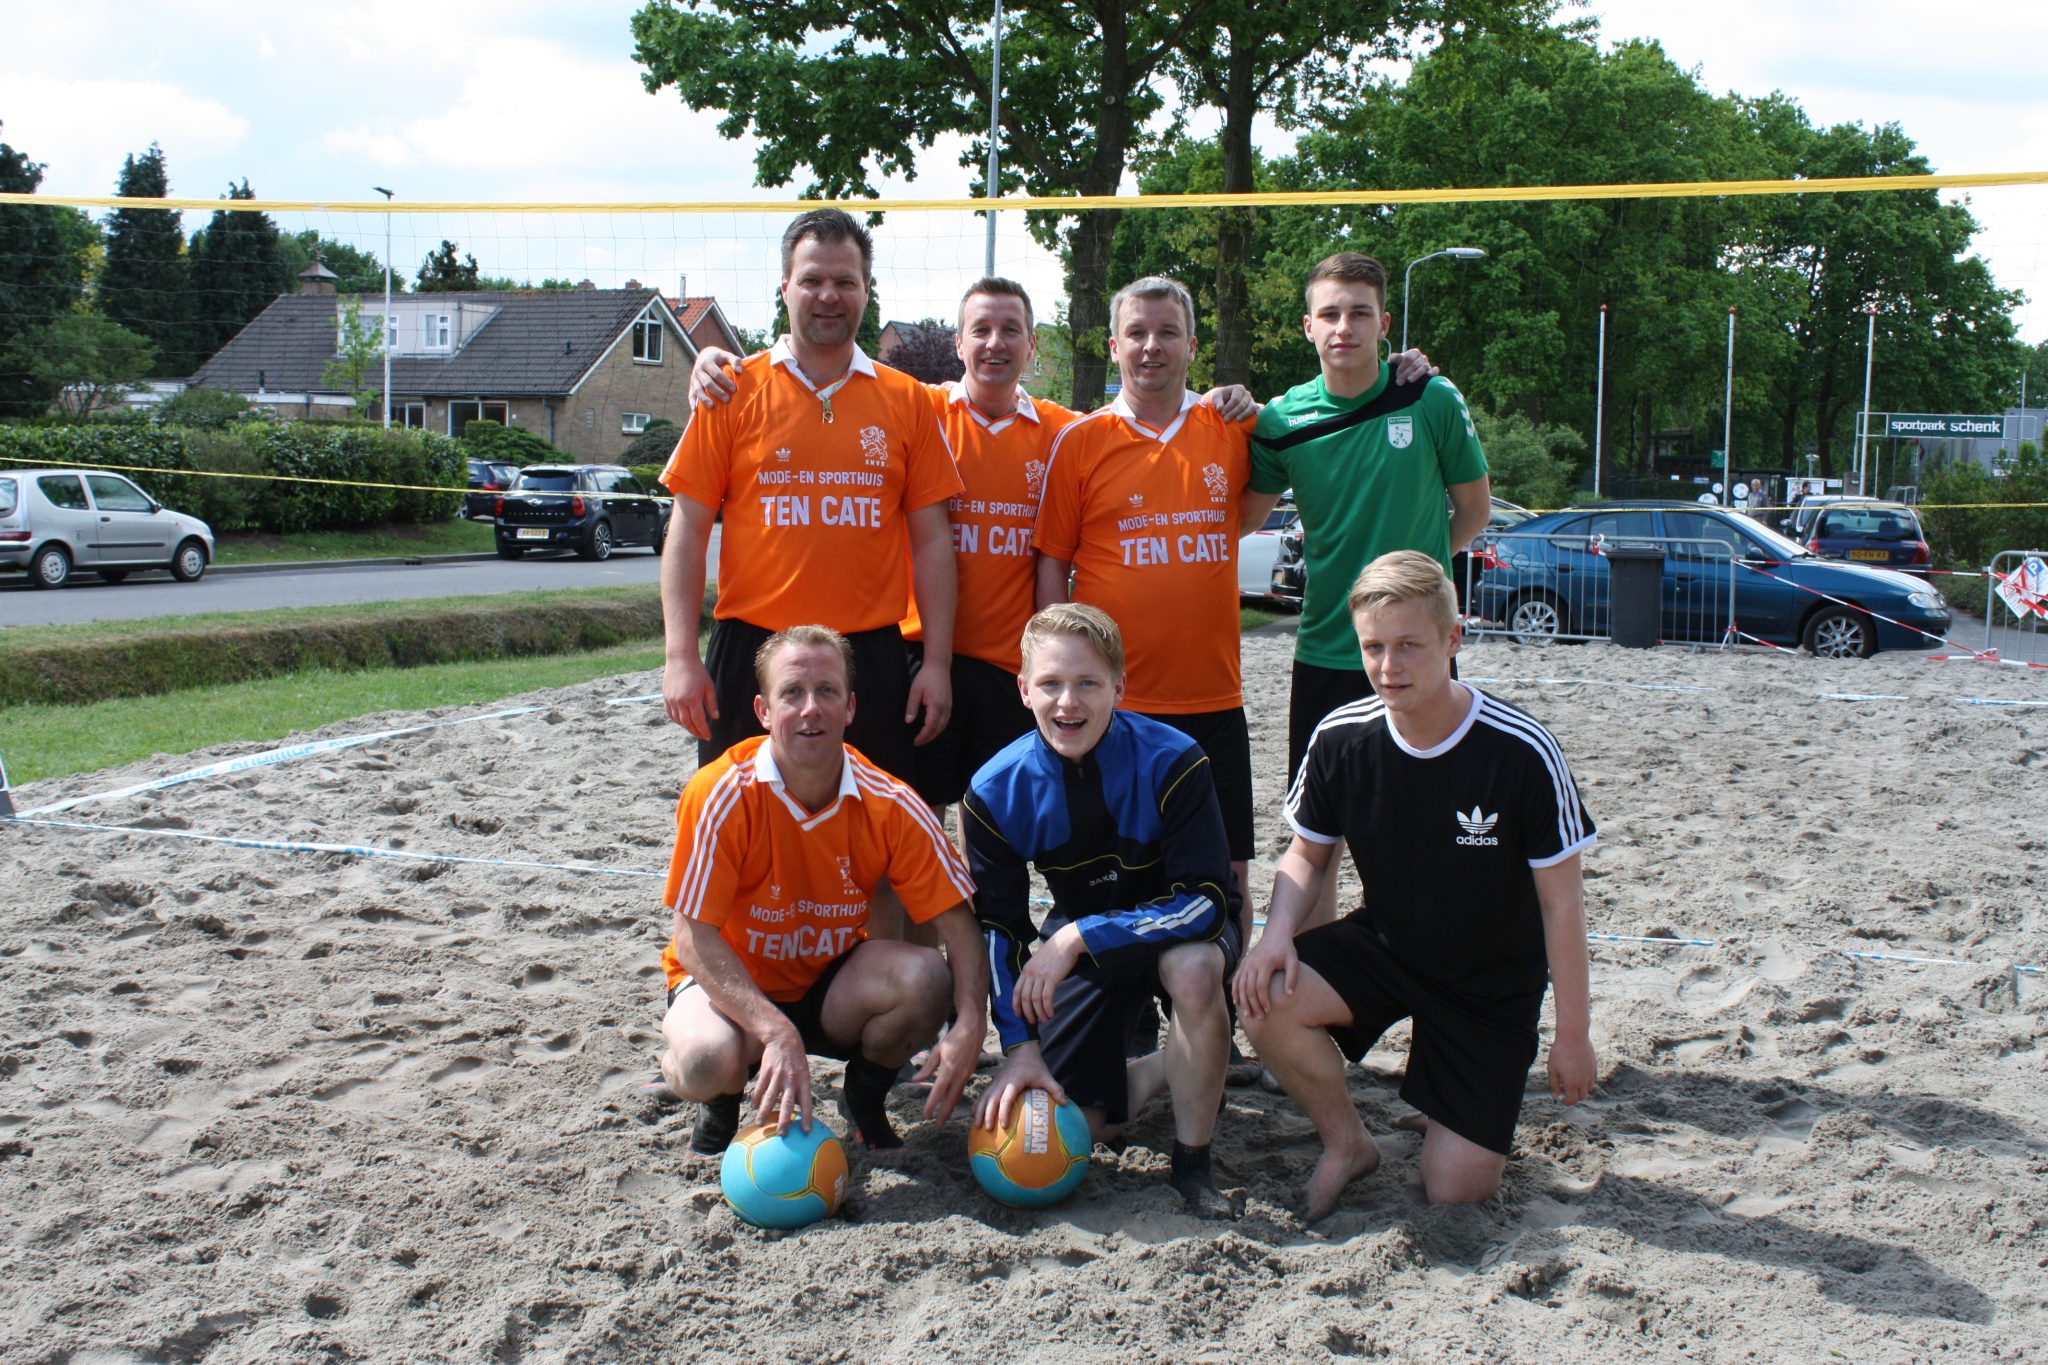 Team Veld 1, correctie veld 2 wint Beach voetvolley toernooi